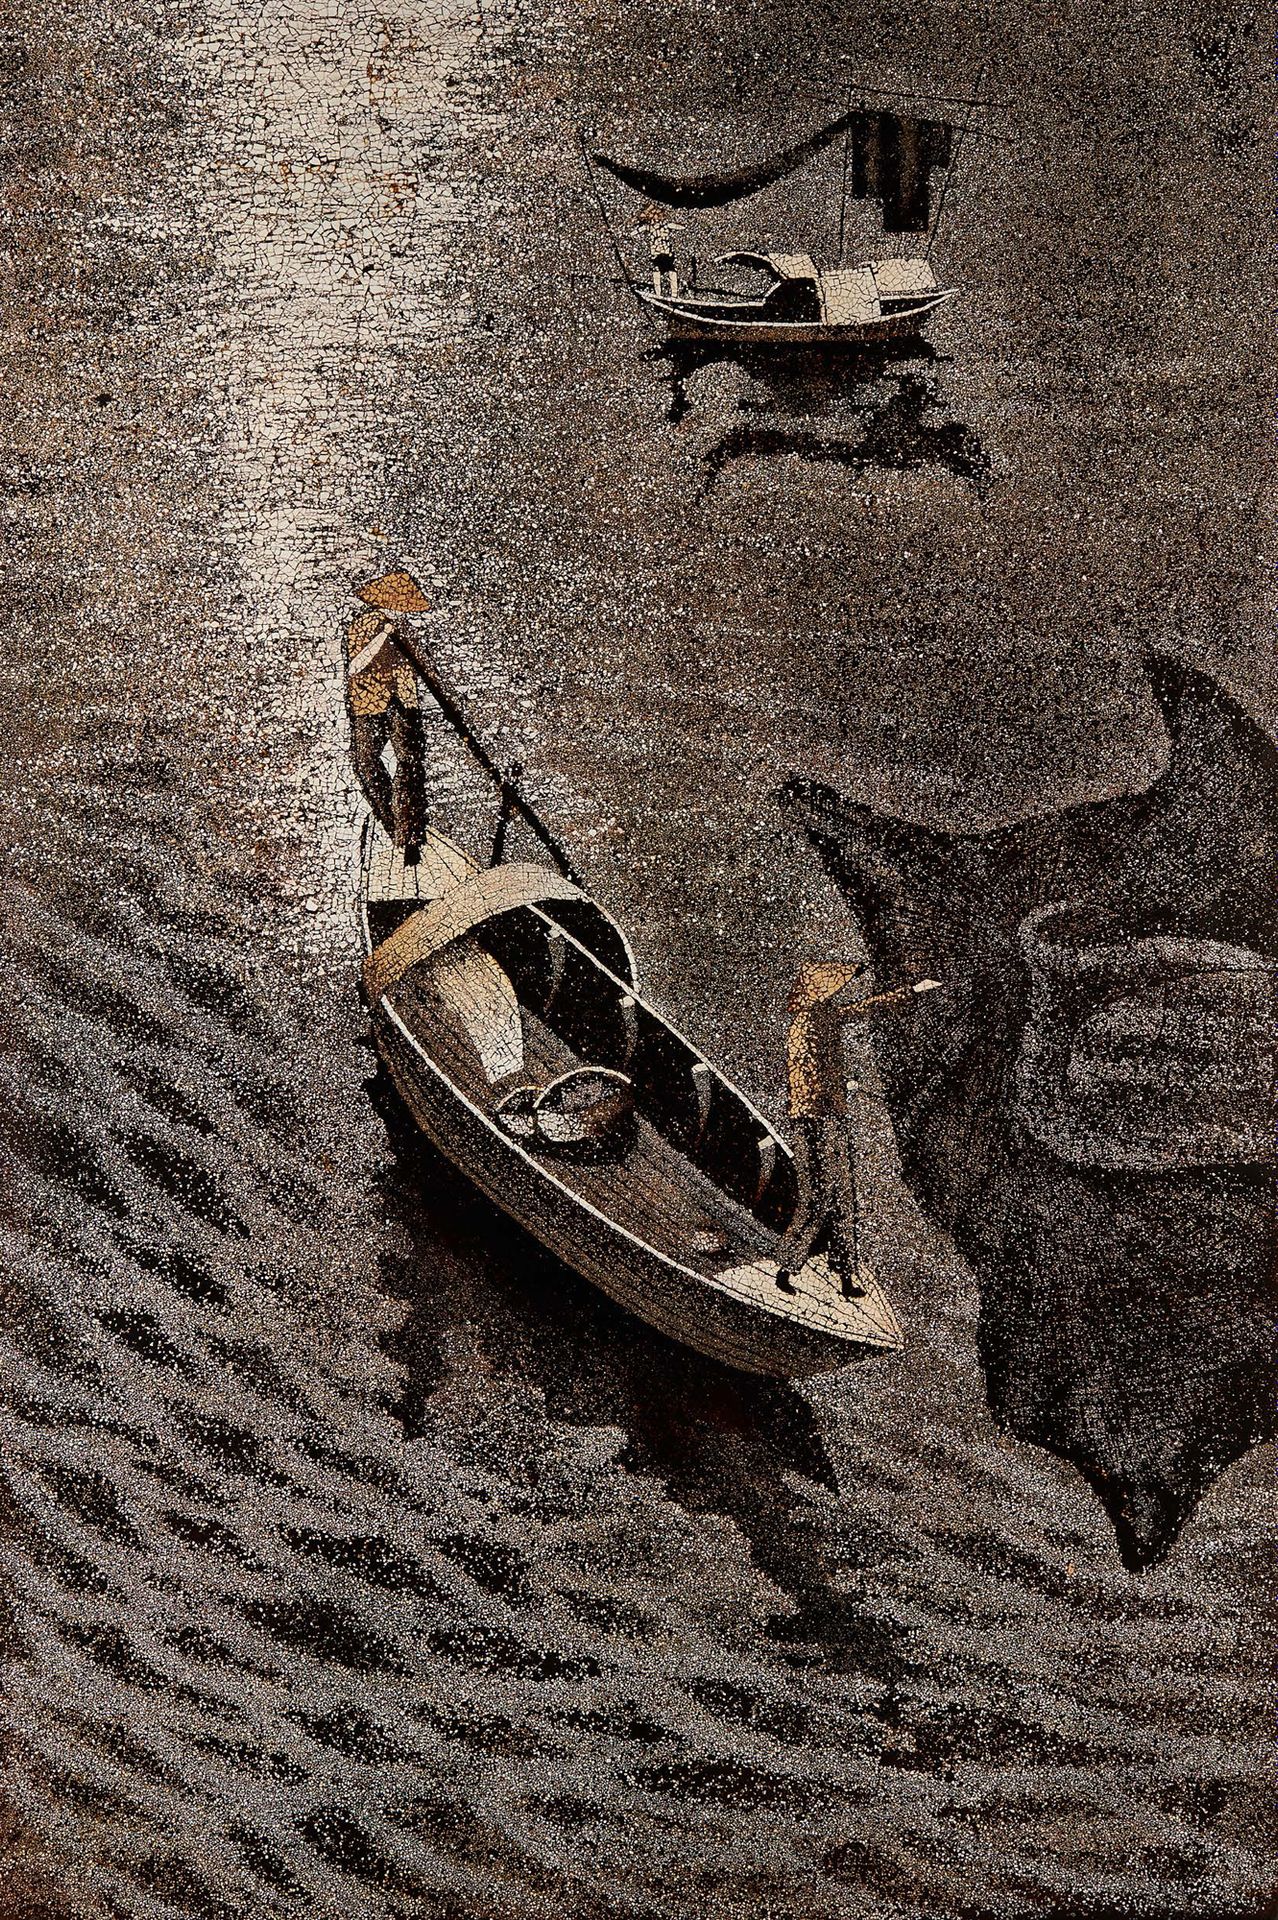 VIETNAM 长方形漆板，镶嵌蛋壳，表现河上的两艘渔船
约1930 - 1940
Dim. 60 x 40 cm